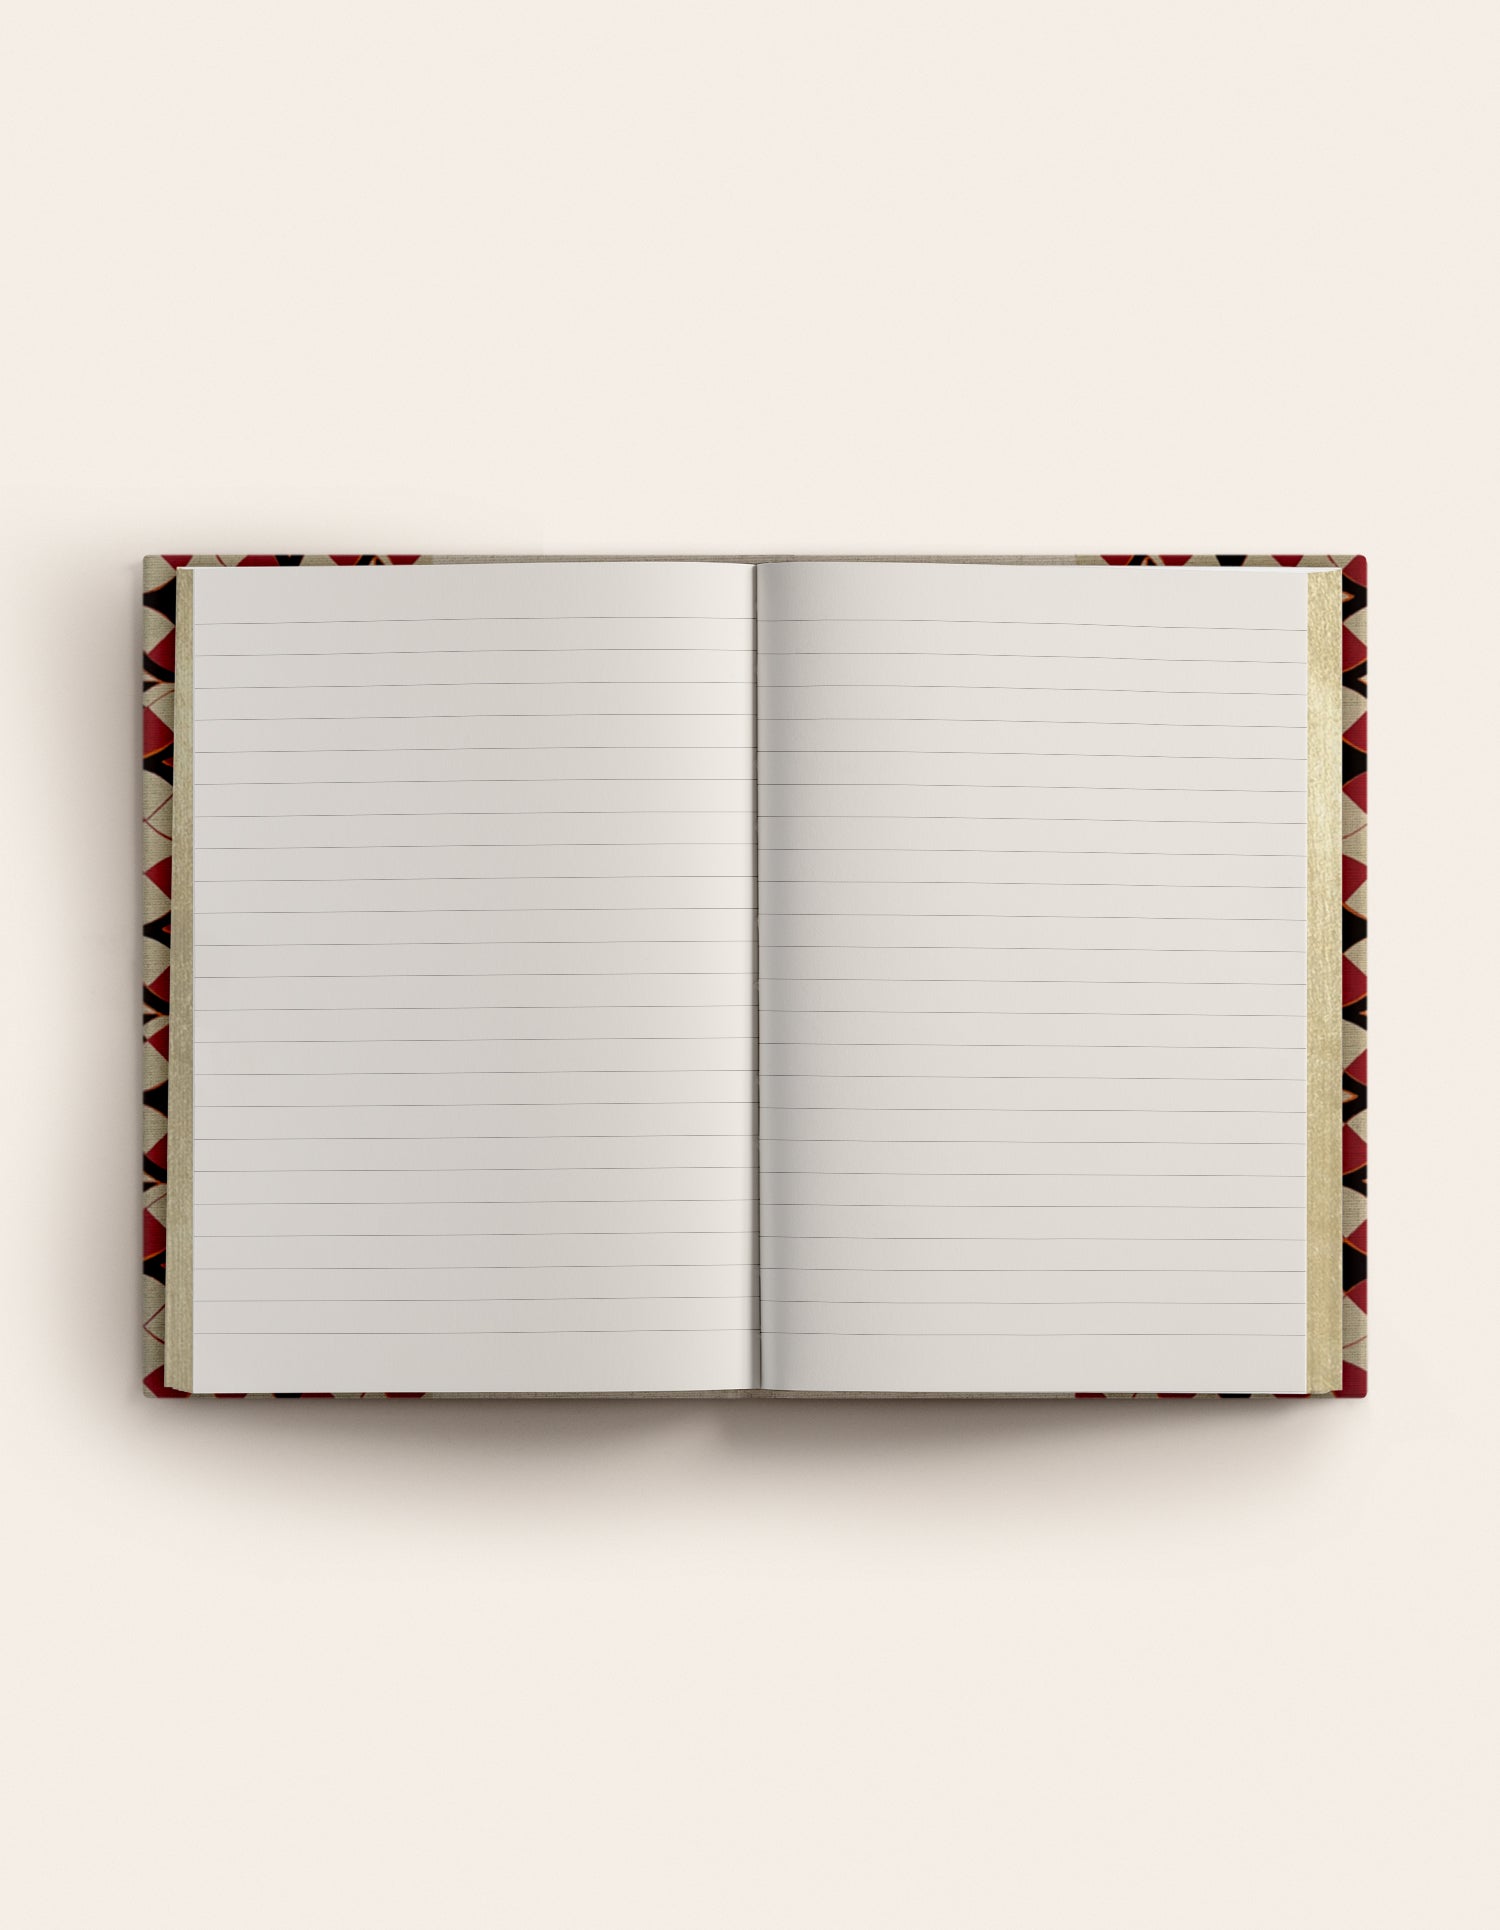 Shaded Rosette notebook